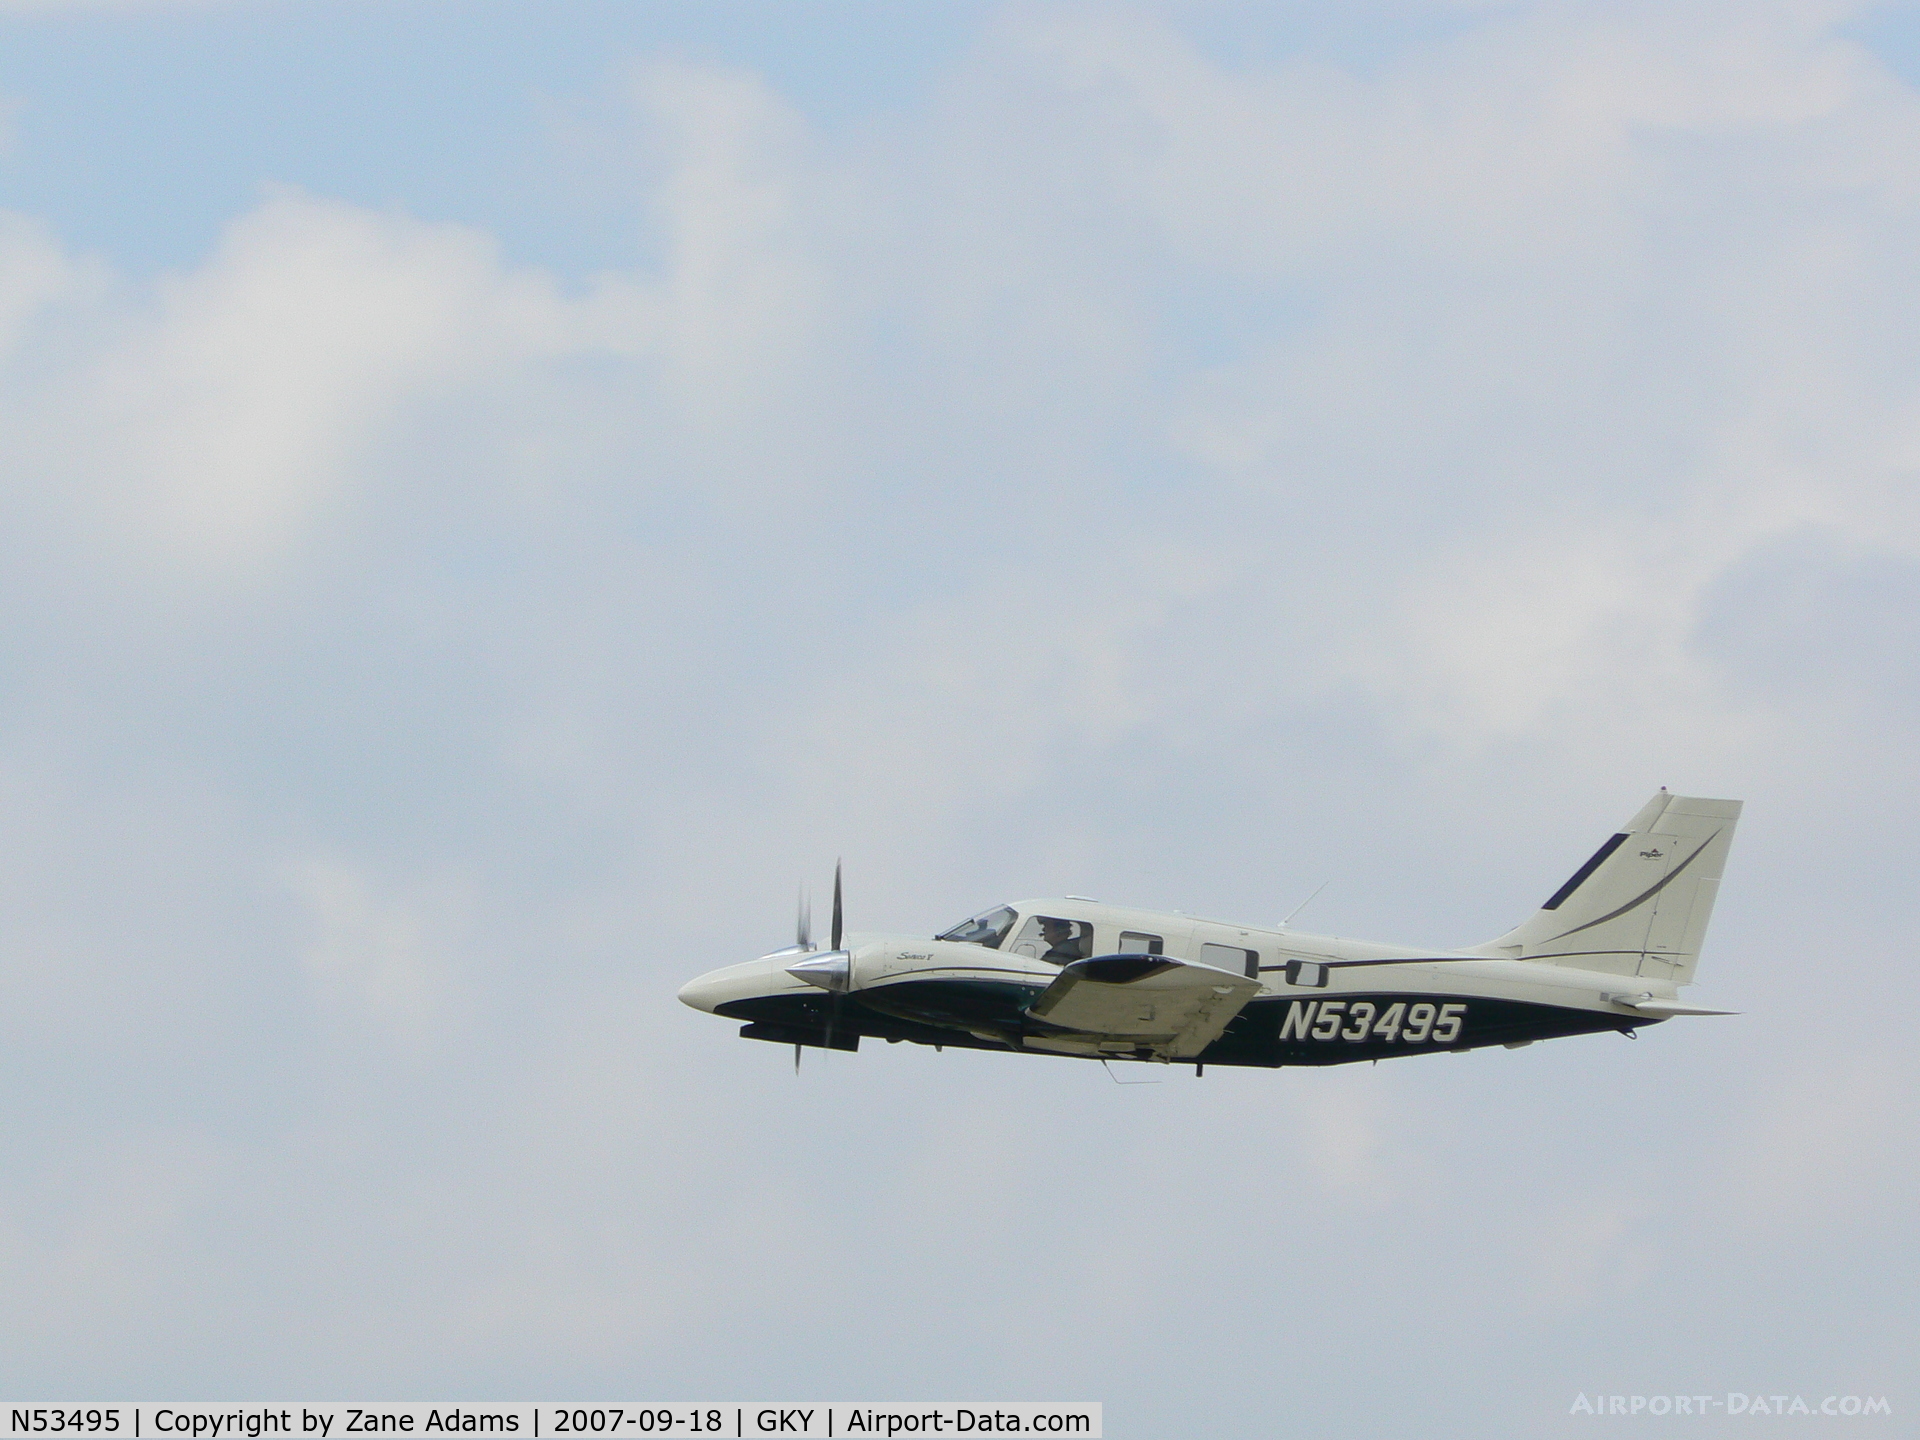 N53495, 2002 Piper PA-34-220T C/N 3449249, Takeoff from Arlington Muni